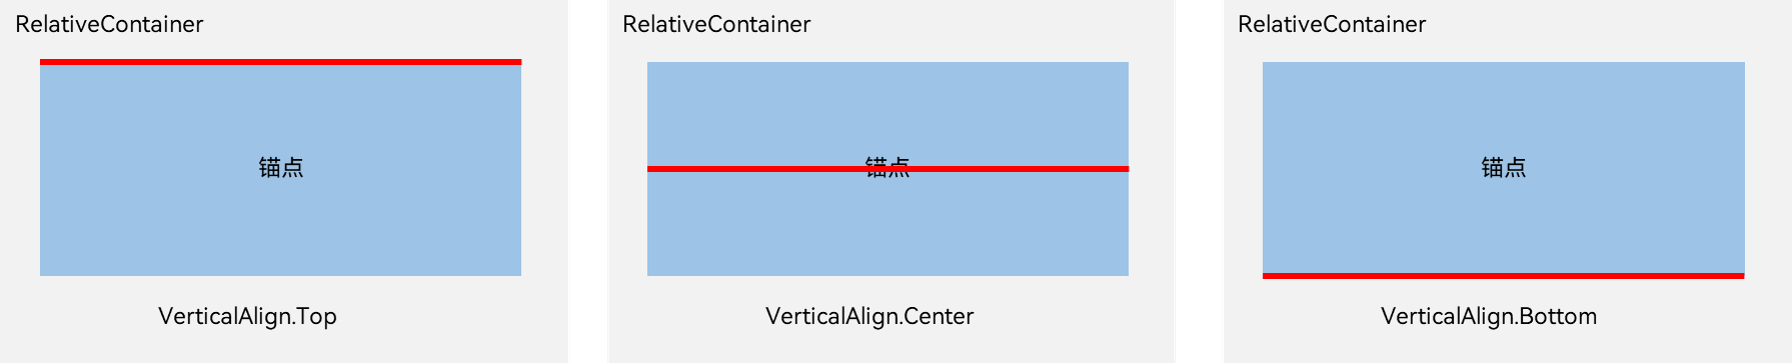 alignment-relative-anchor-vertical